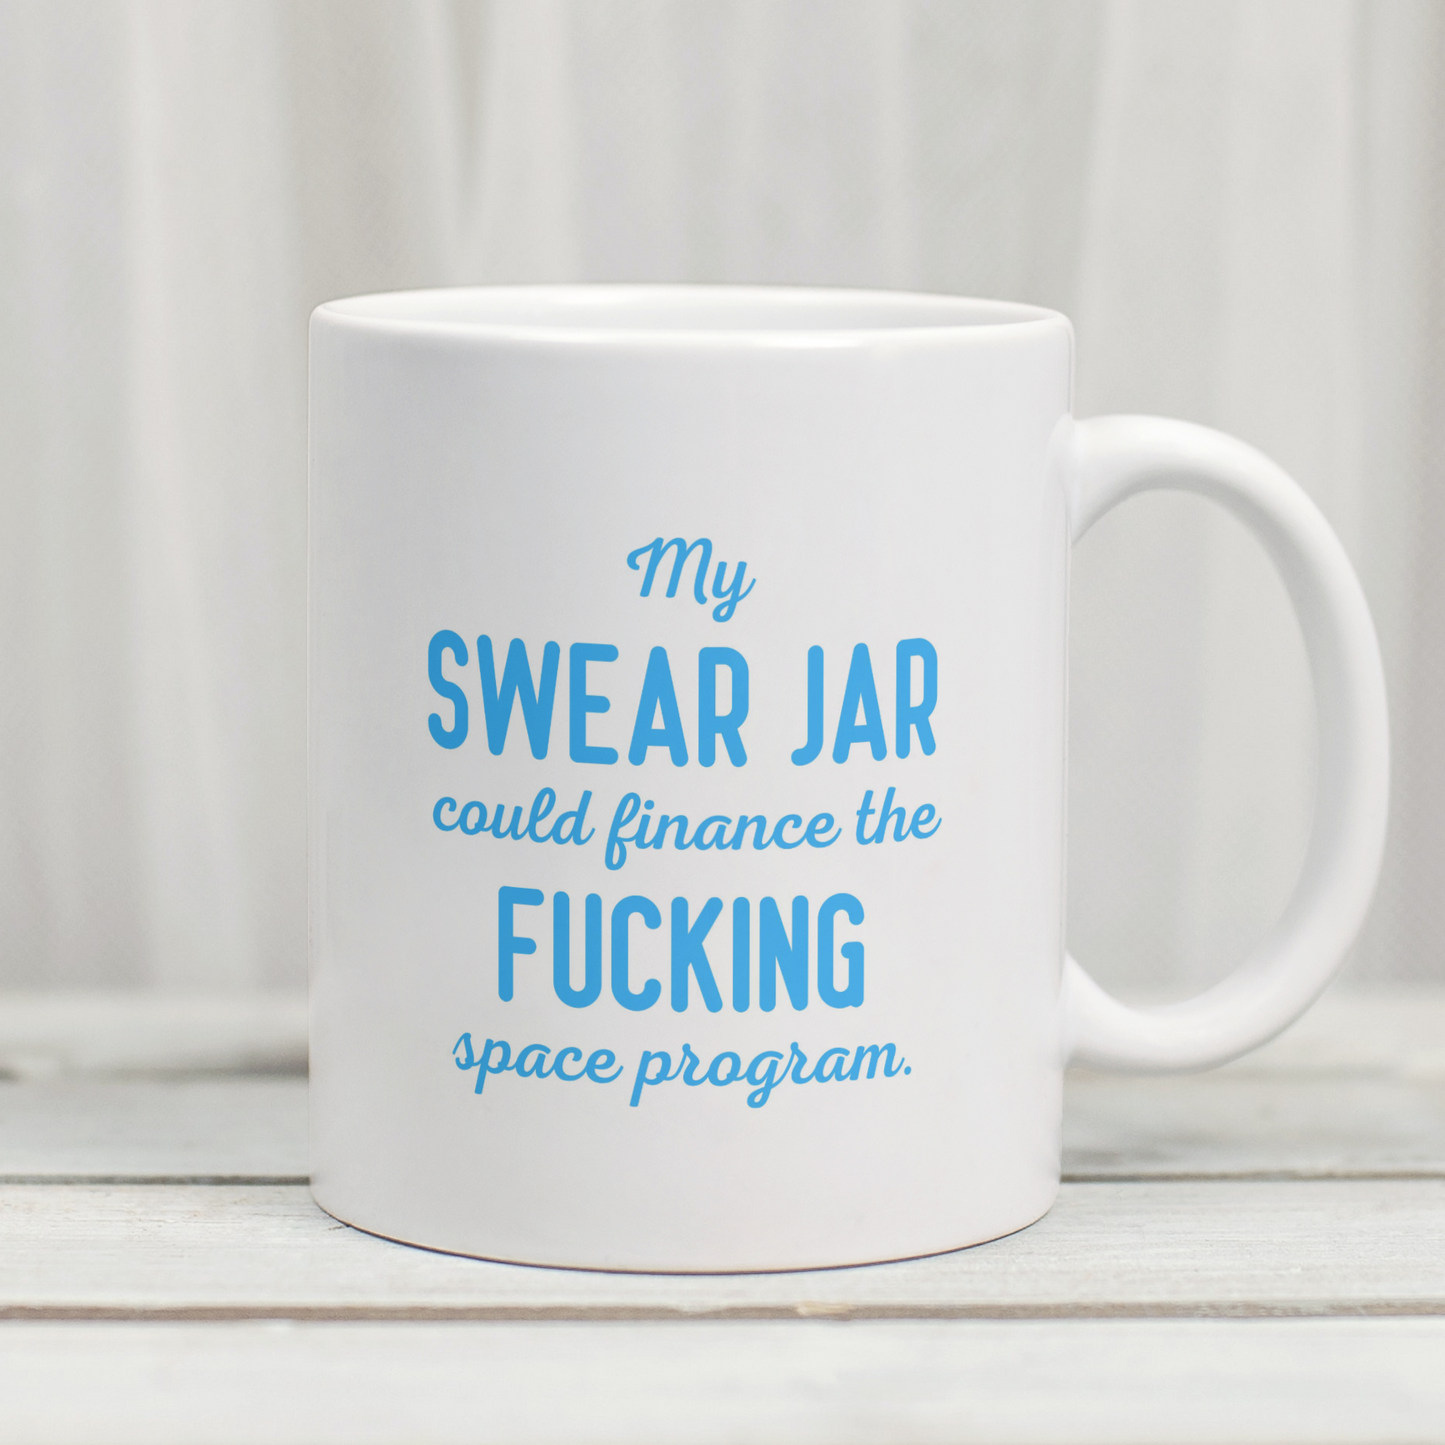 Swear jars and space programs - Mug